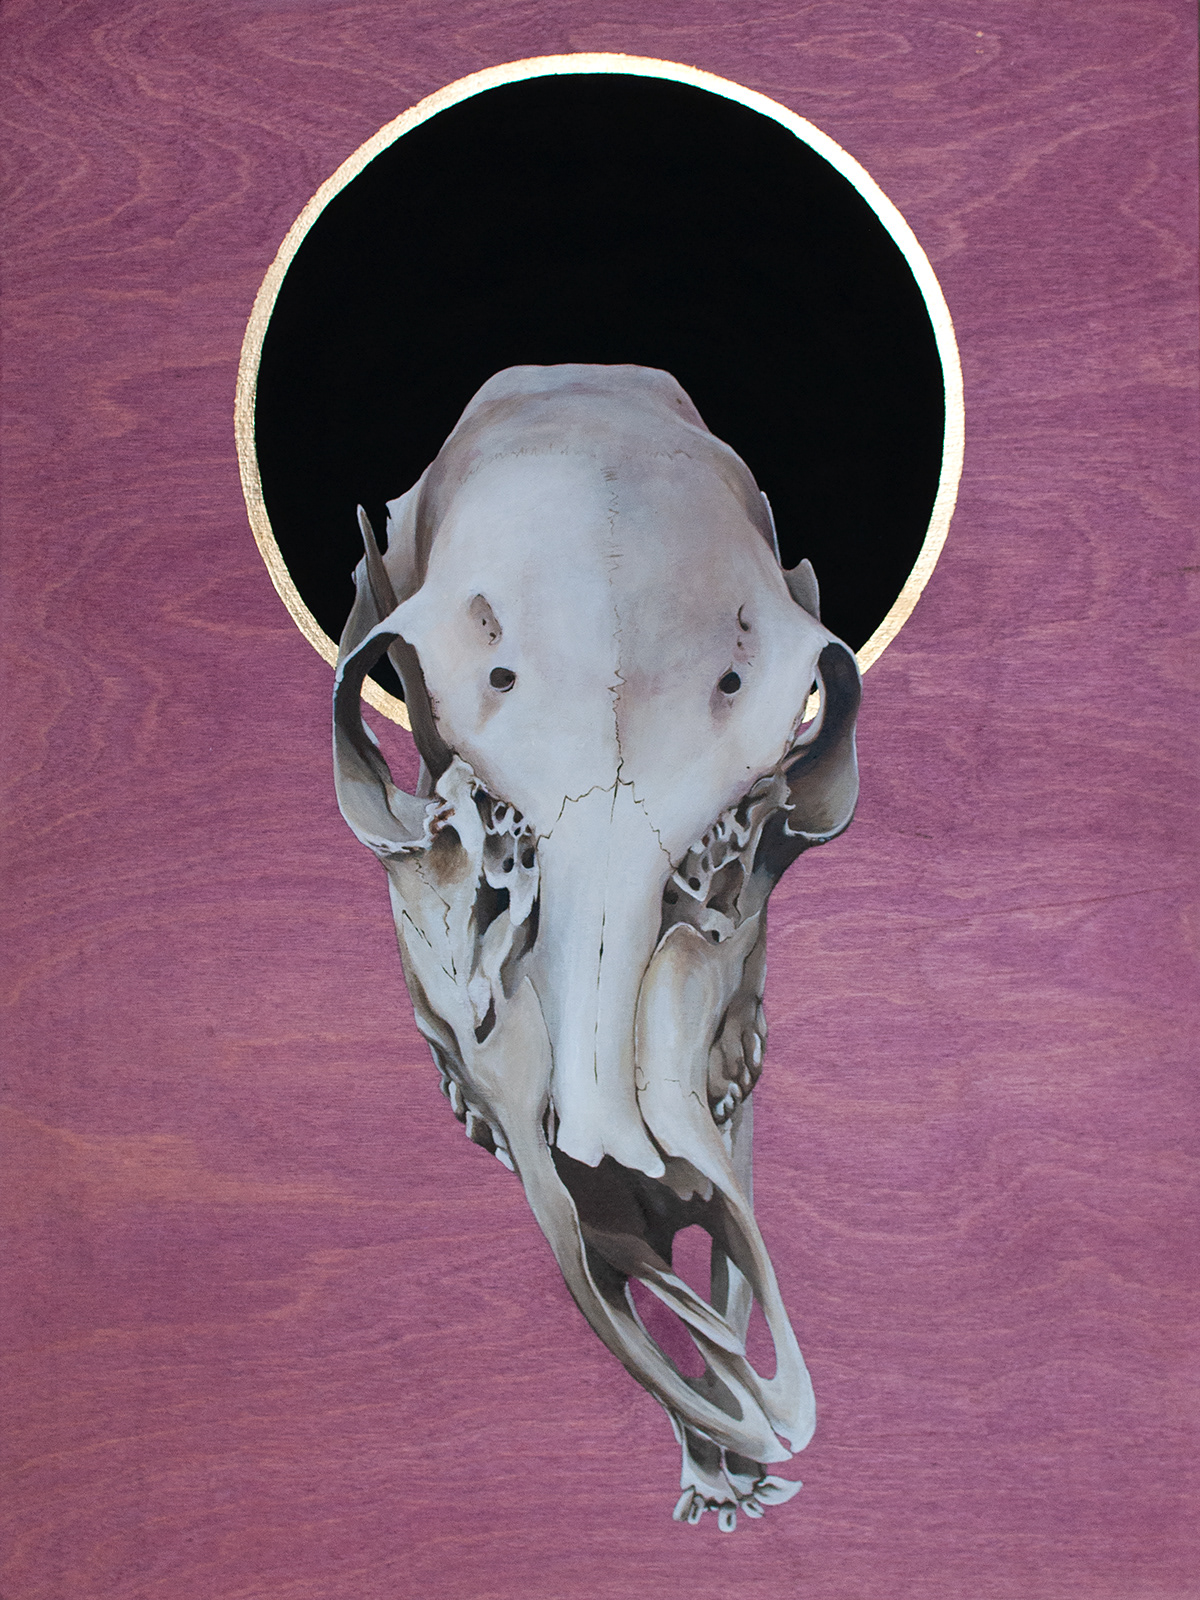 acrylic painting gold leaf Wood Panel doe skull skull deformity Halo black 2.0 wood grain symbolism